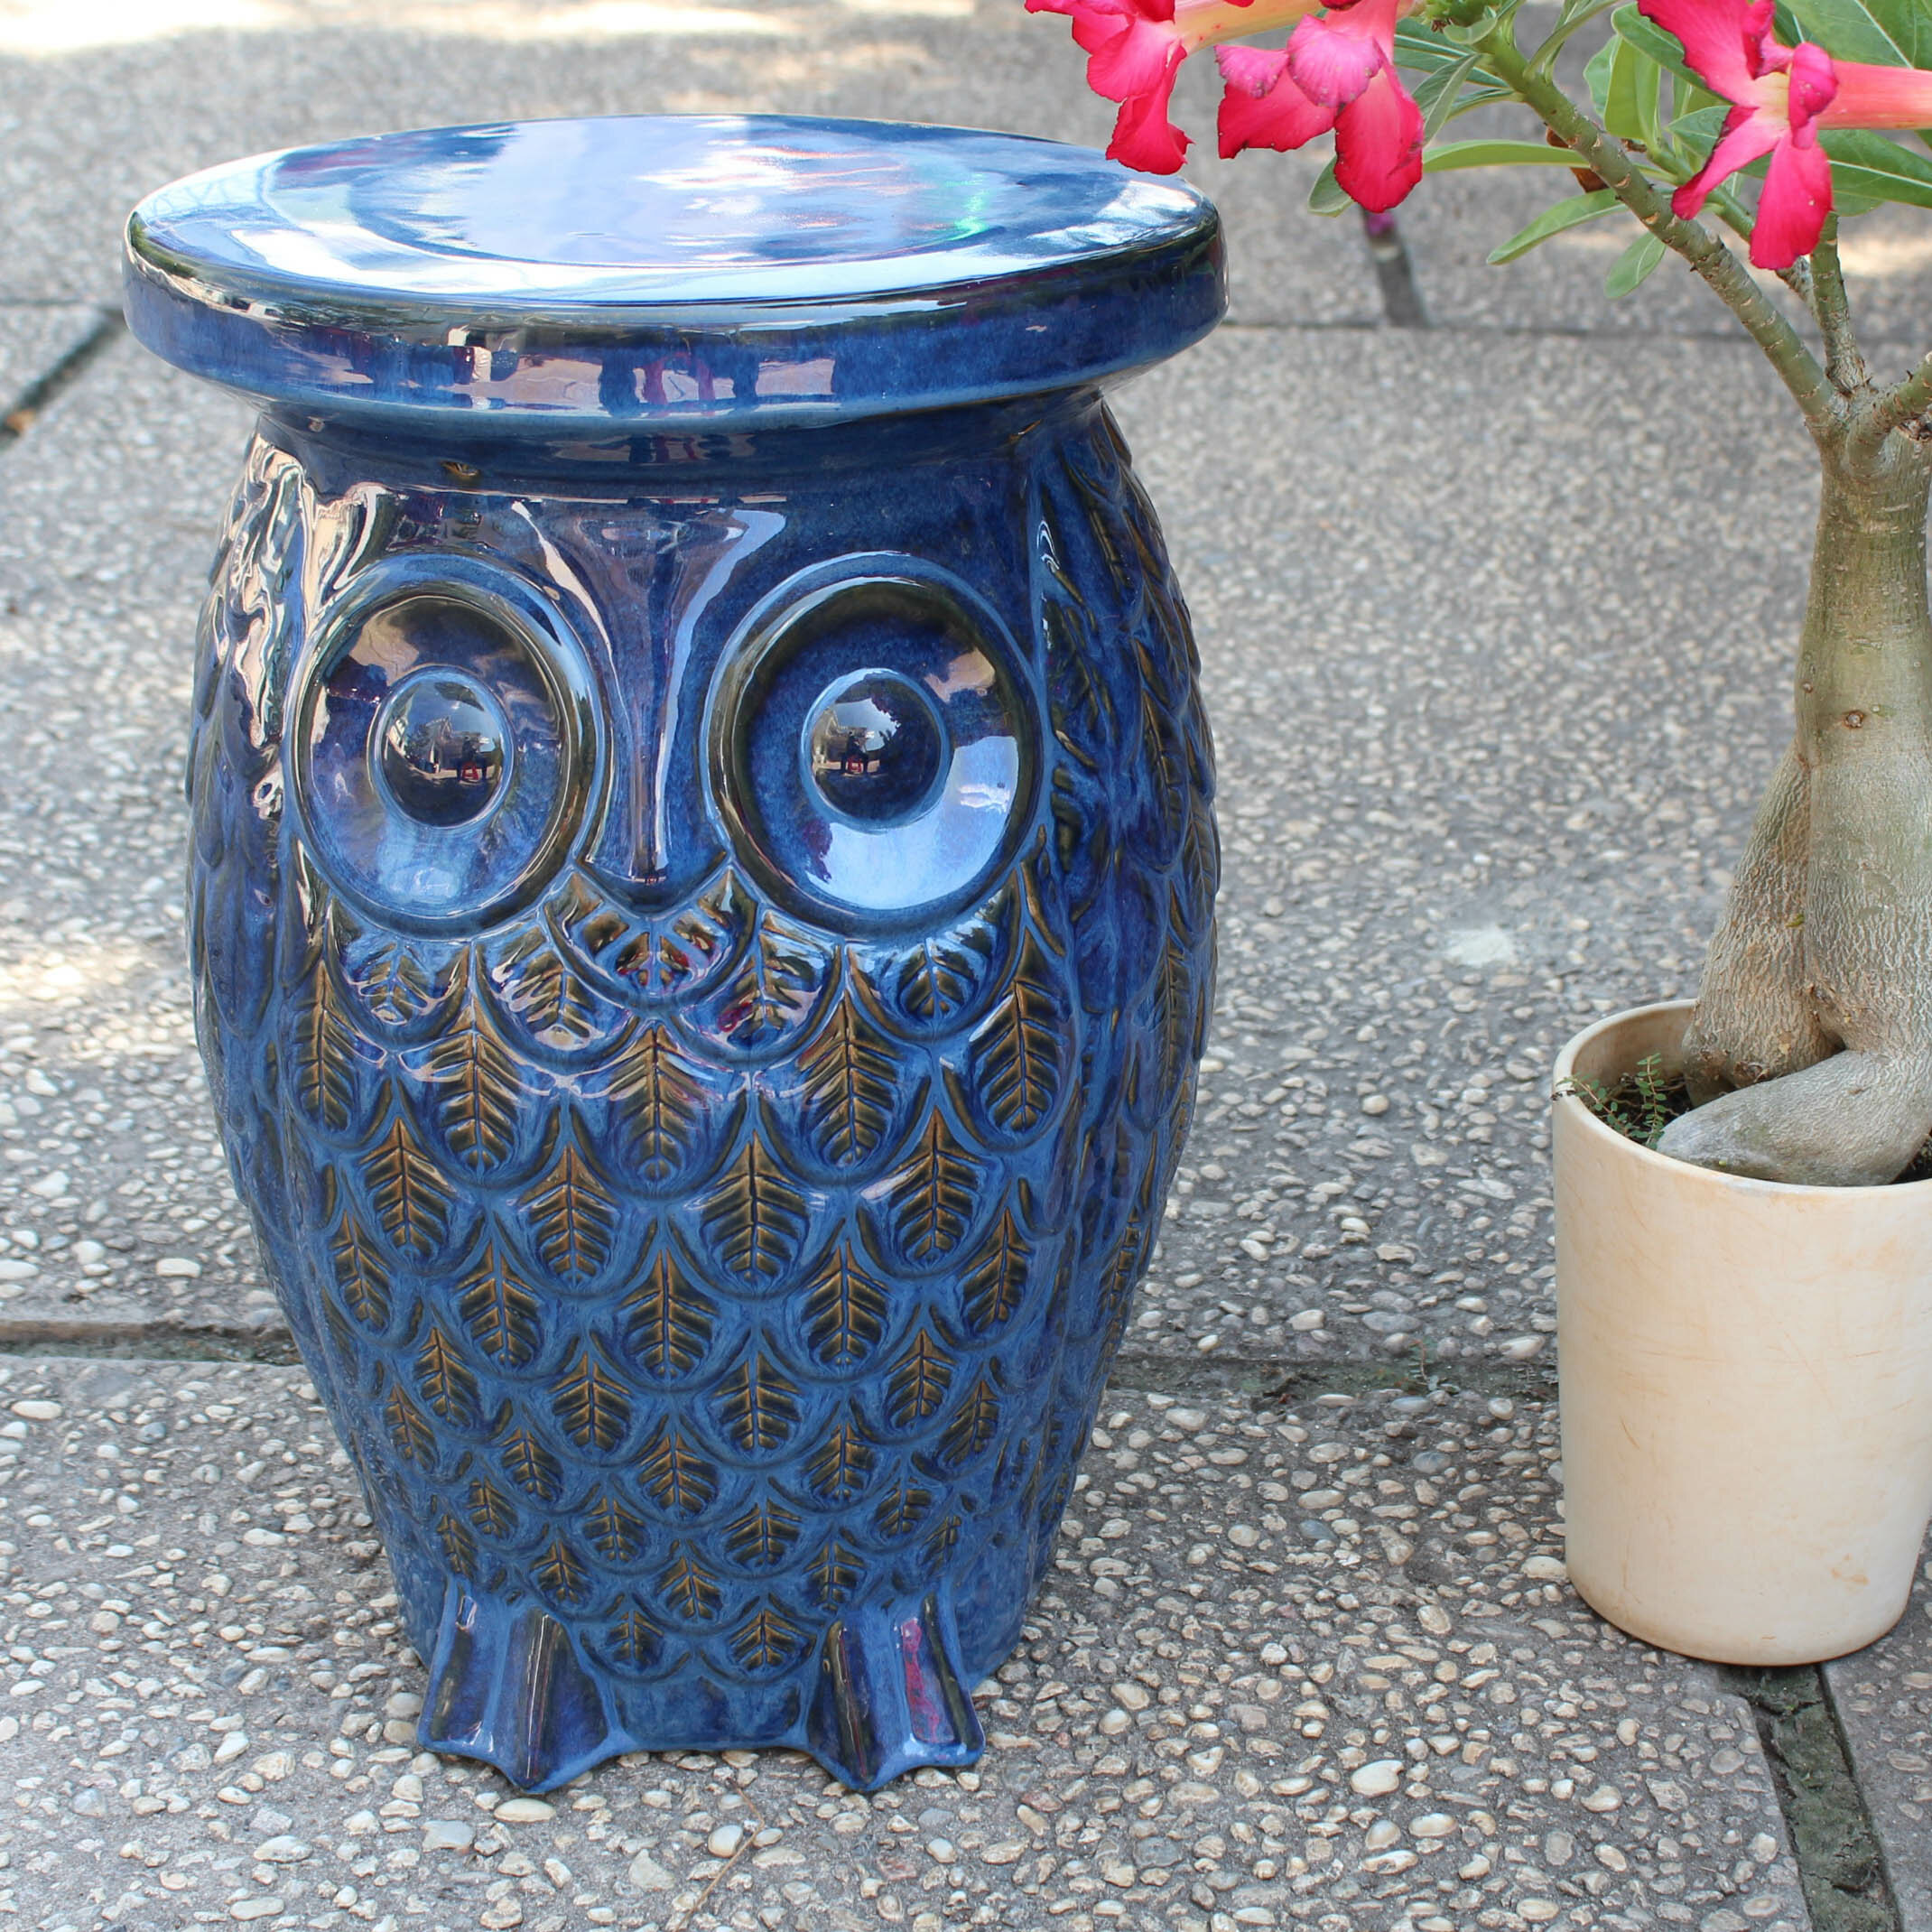 Bungalow Rose Makhzane Owl Ceramic Garden Stool Reviews Wayfair